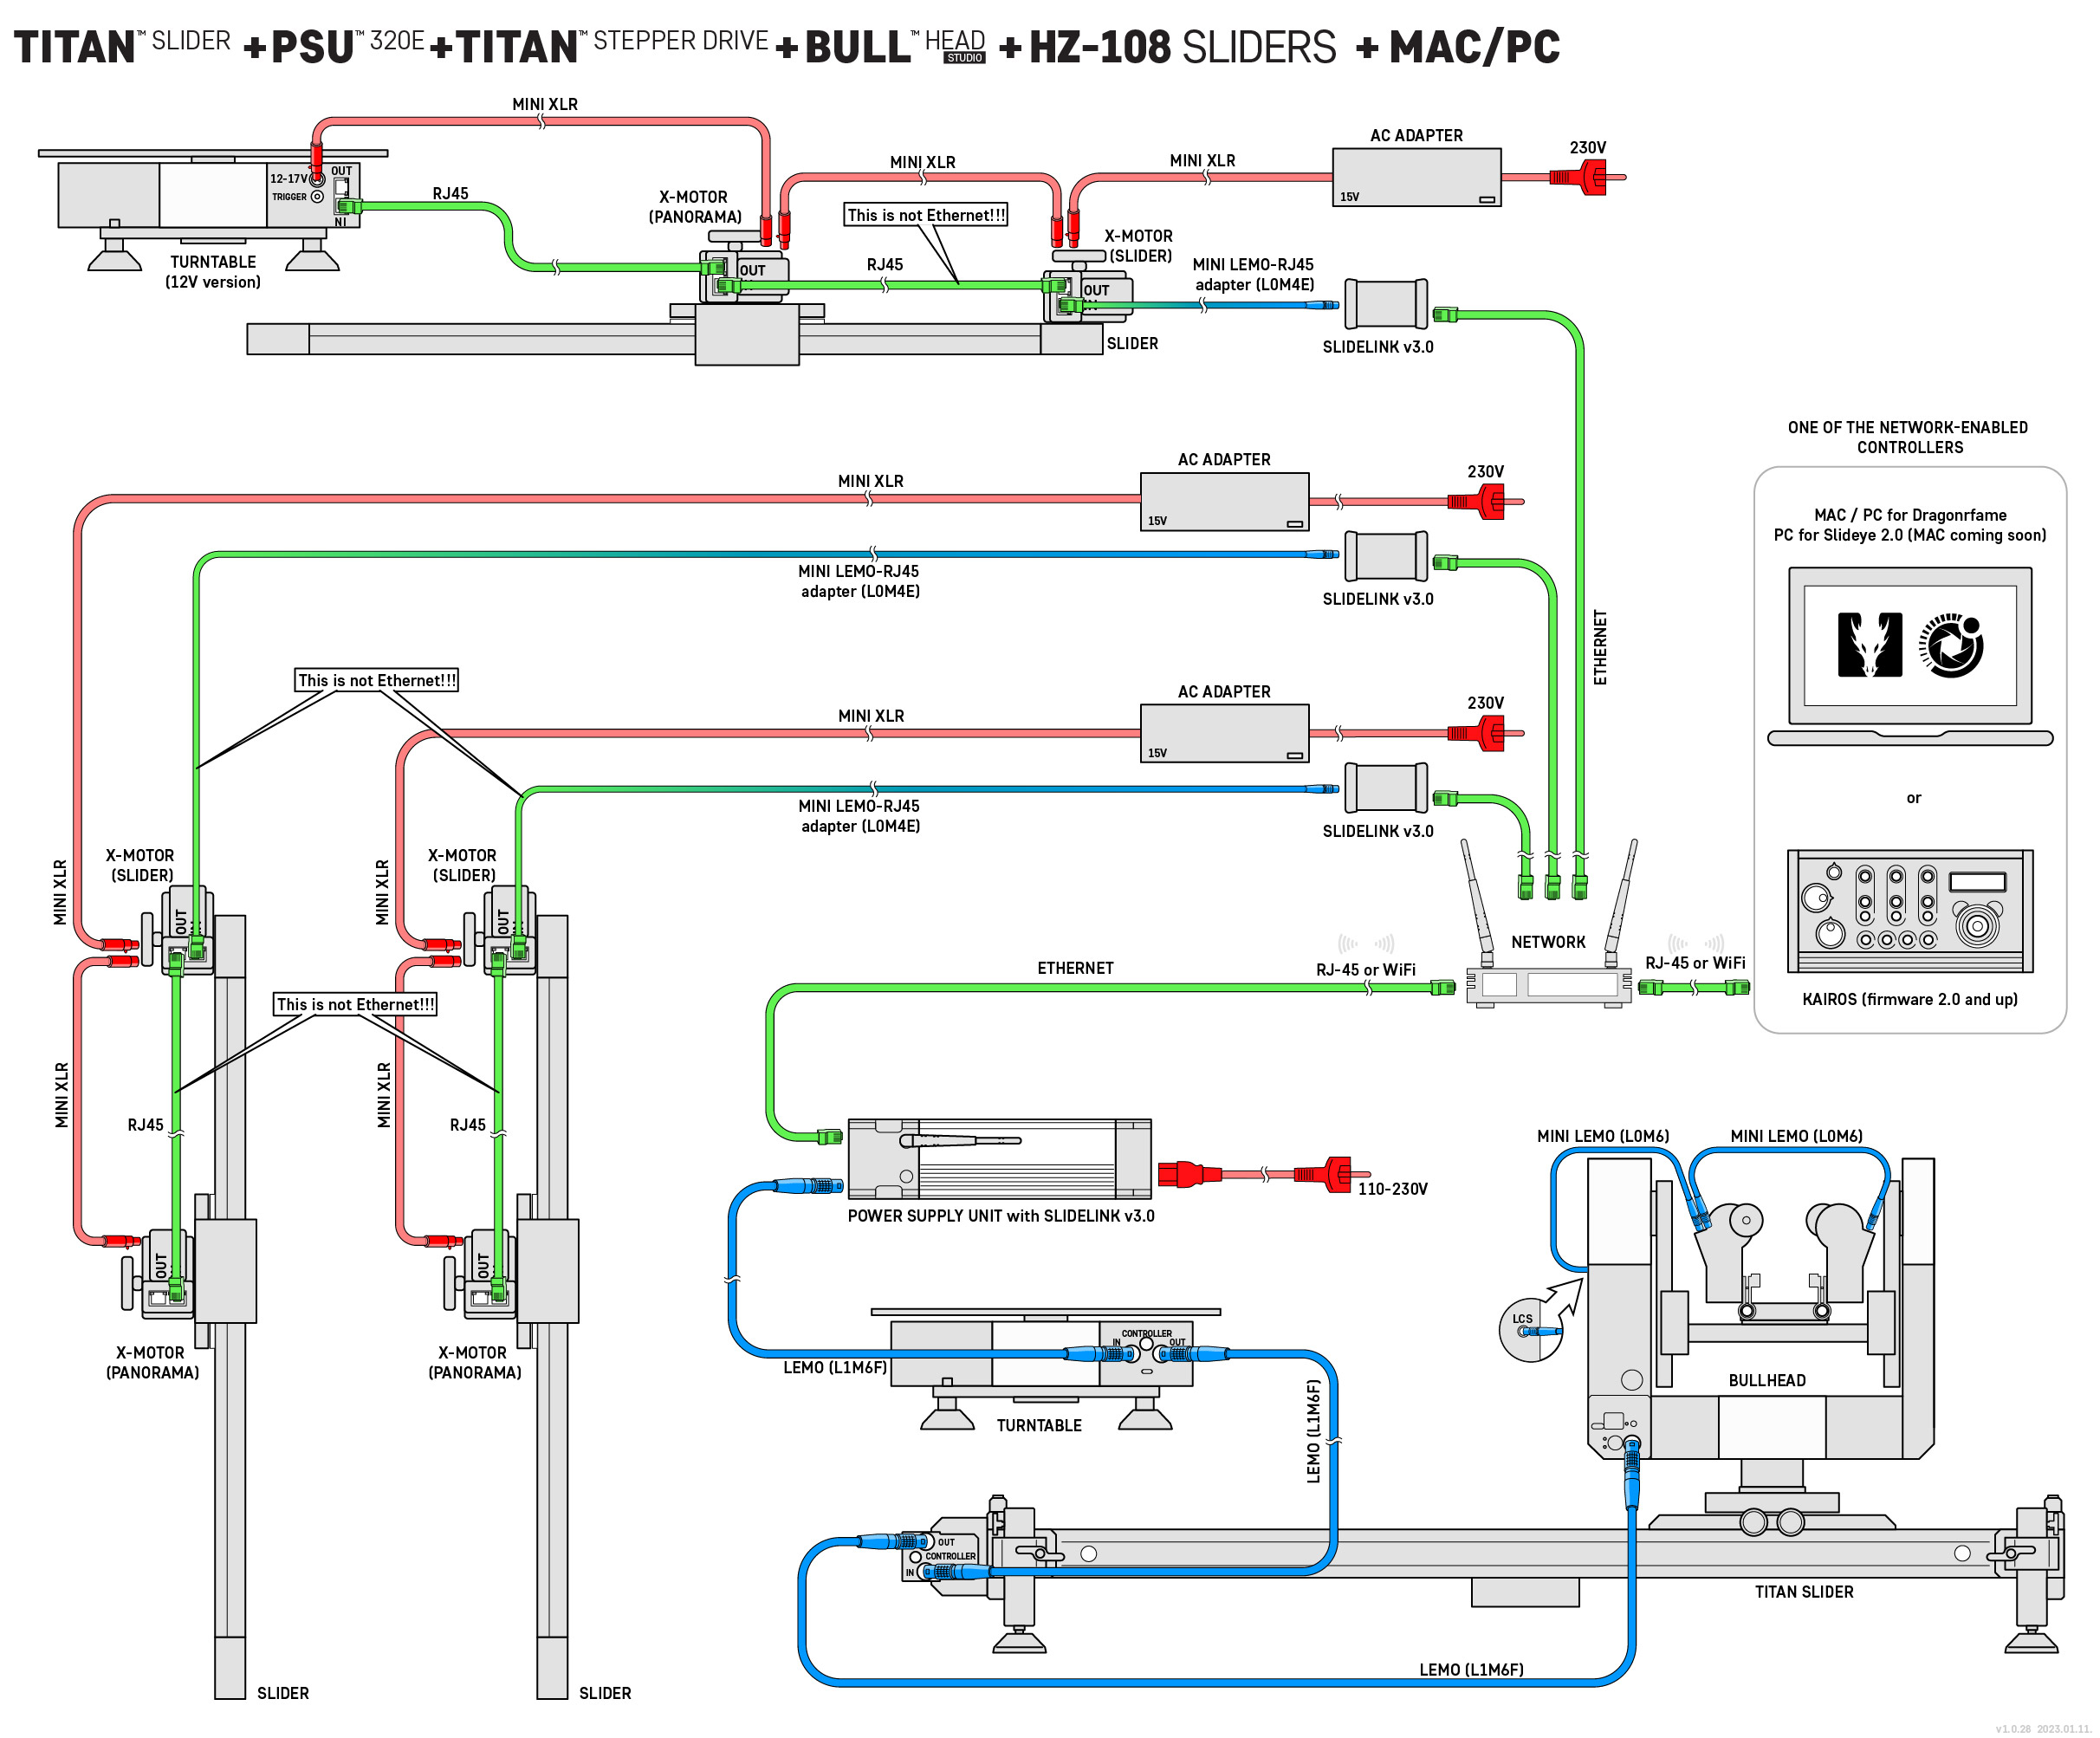 hz-108 - Ethernet workflow with multiple Slidelink 3.0 modules